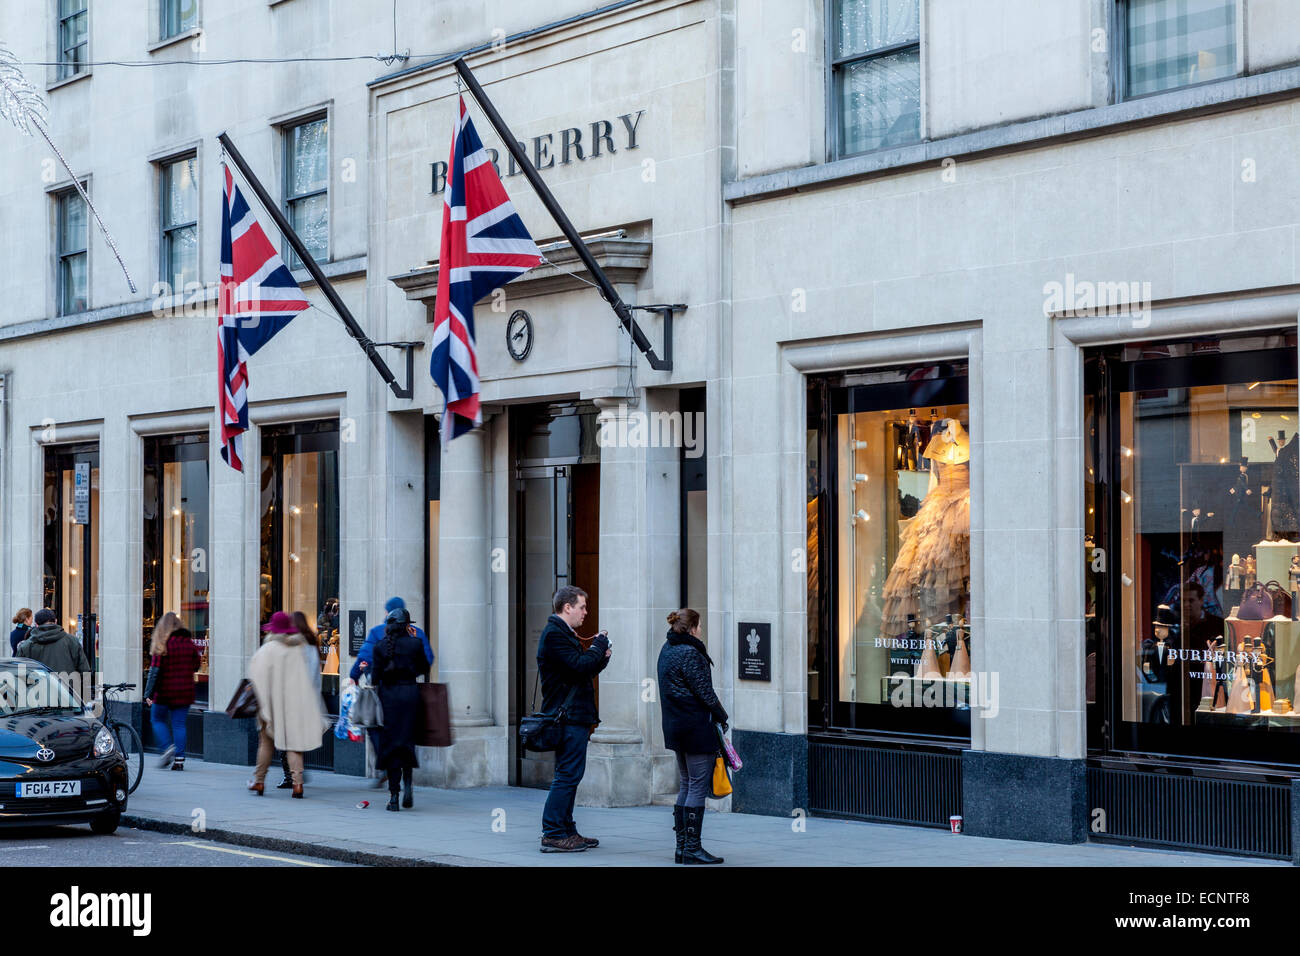 burberry new bond street london